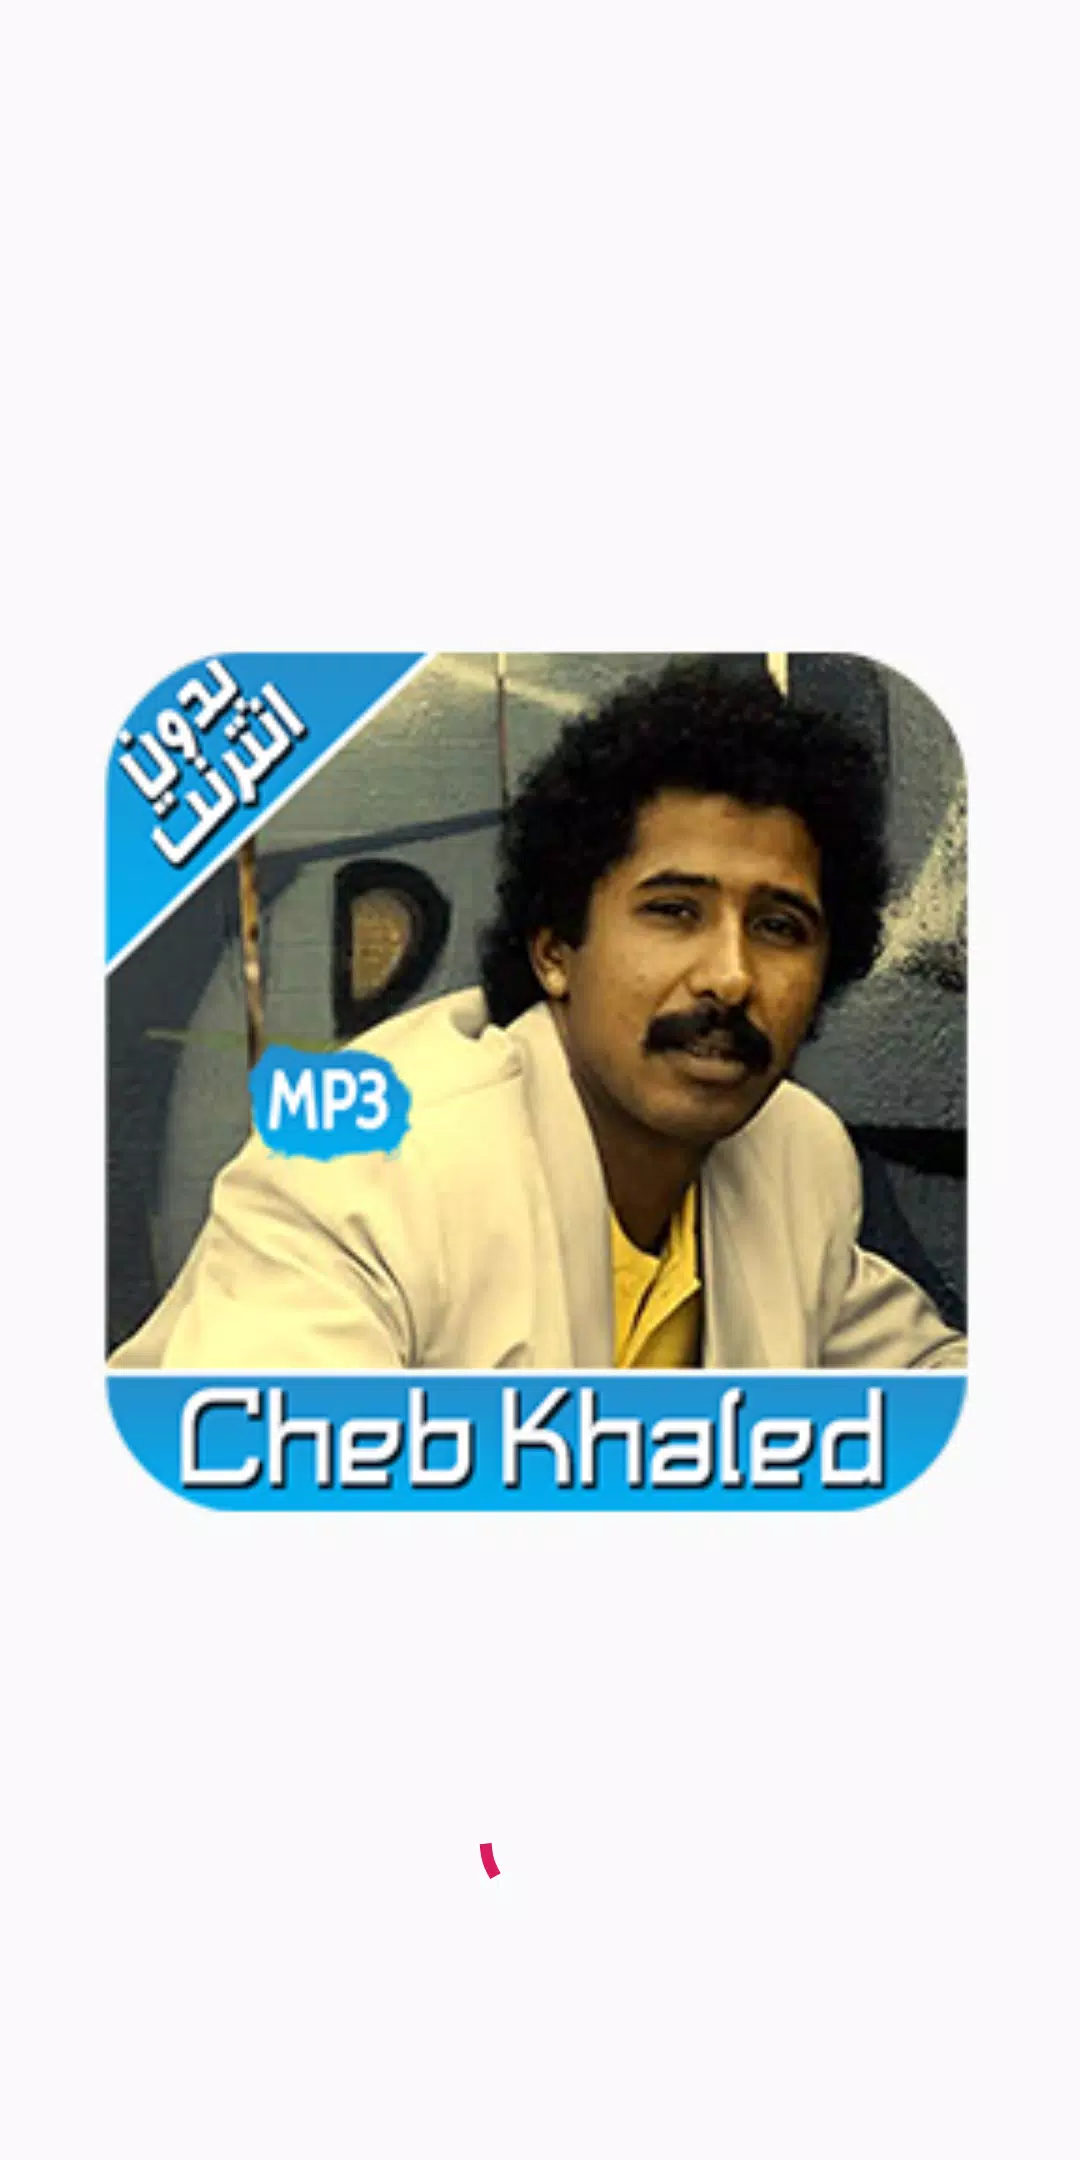 جديد أغاني الشاب خالد بدون نت - Cheb Khaled APK for Android Download